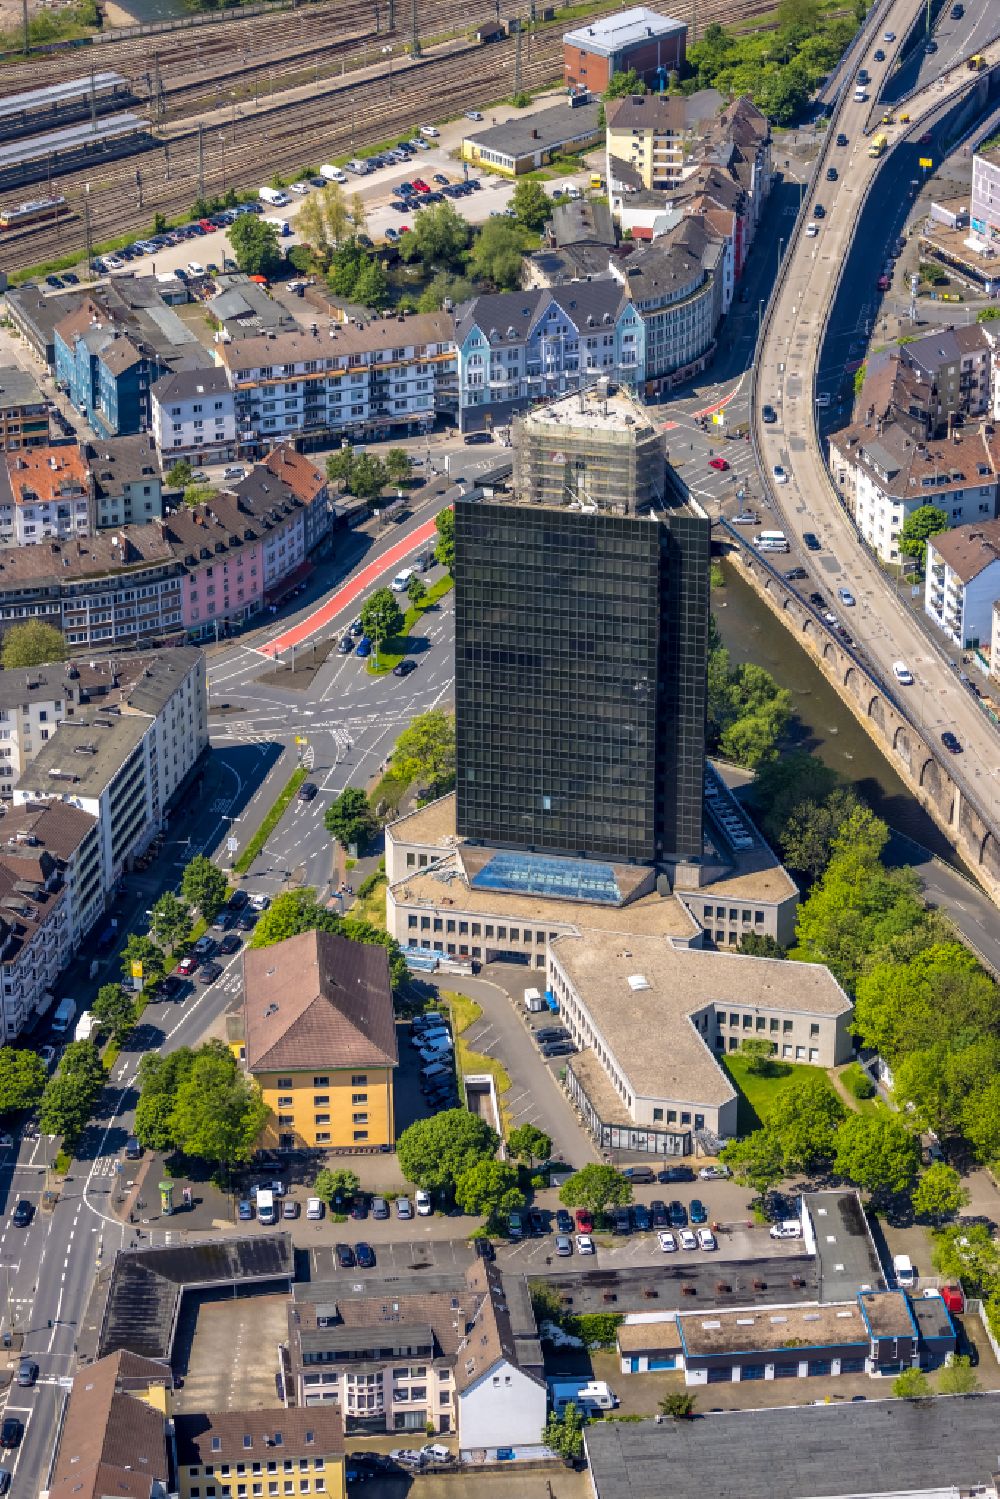 Aerial photograph Hagen - High-rise buildings Agentur fuer Arbeit on Koernerstrasse in Hagen at Ruhrgebiet in the state North Rhine-Westphalia